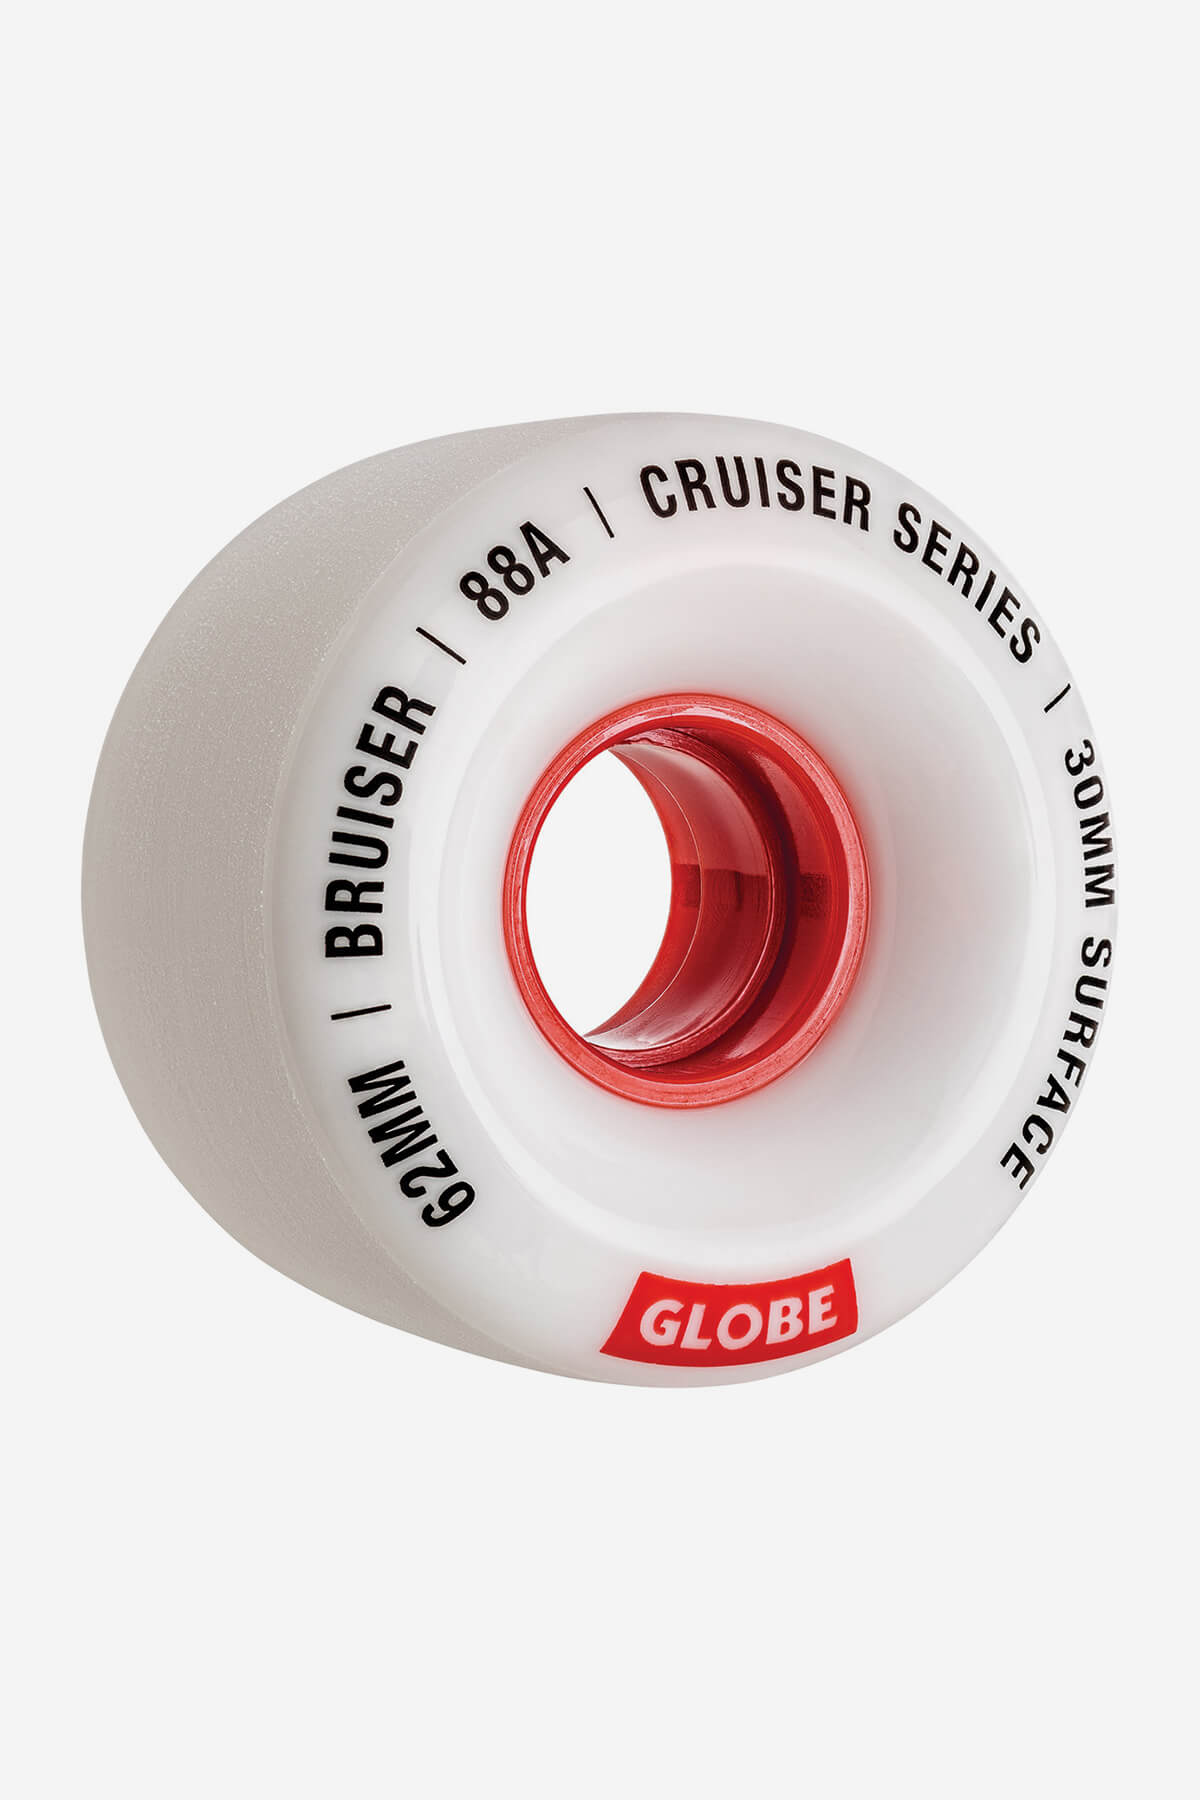 Bruiser Cruiser Roue De Skateboard 62mm - Blanc/Rouge Blanc/Rouge/62